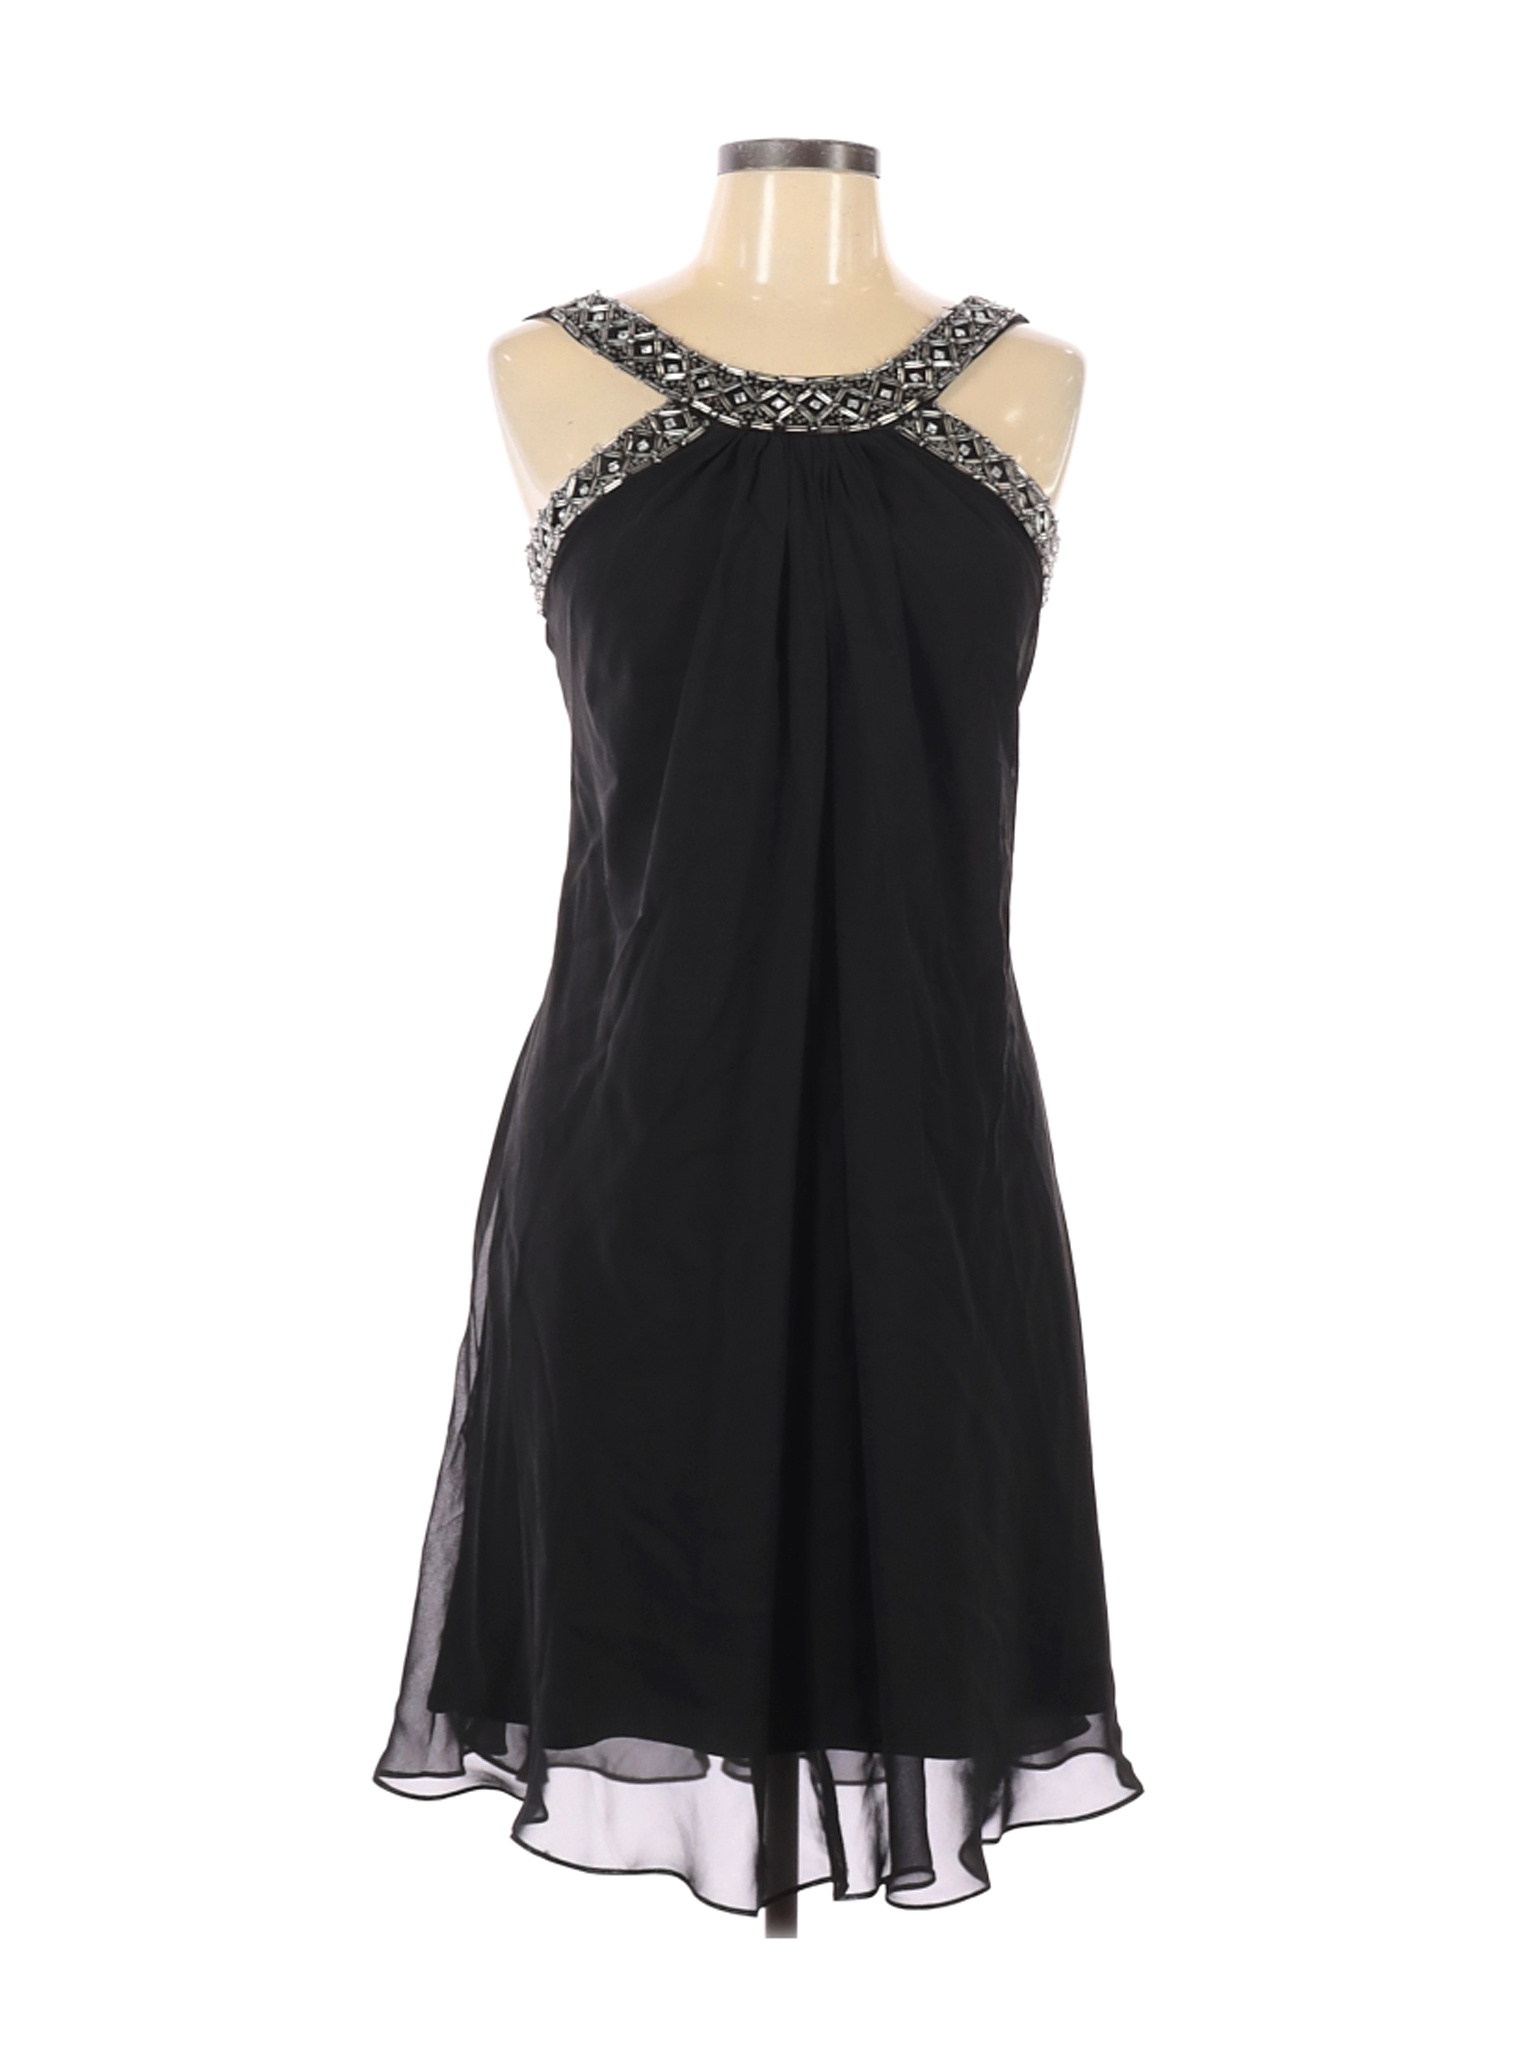 Scarlett Nite Women Black Cocktail Dress 8 | eBay